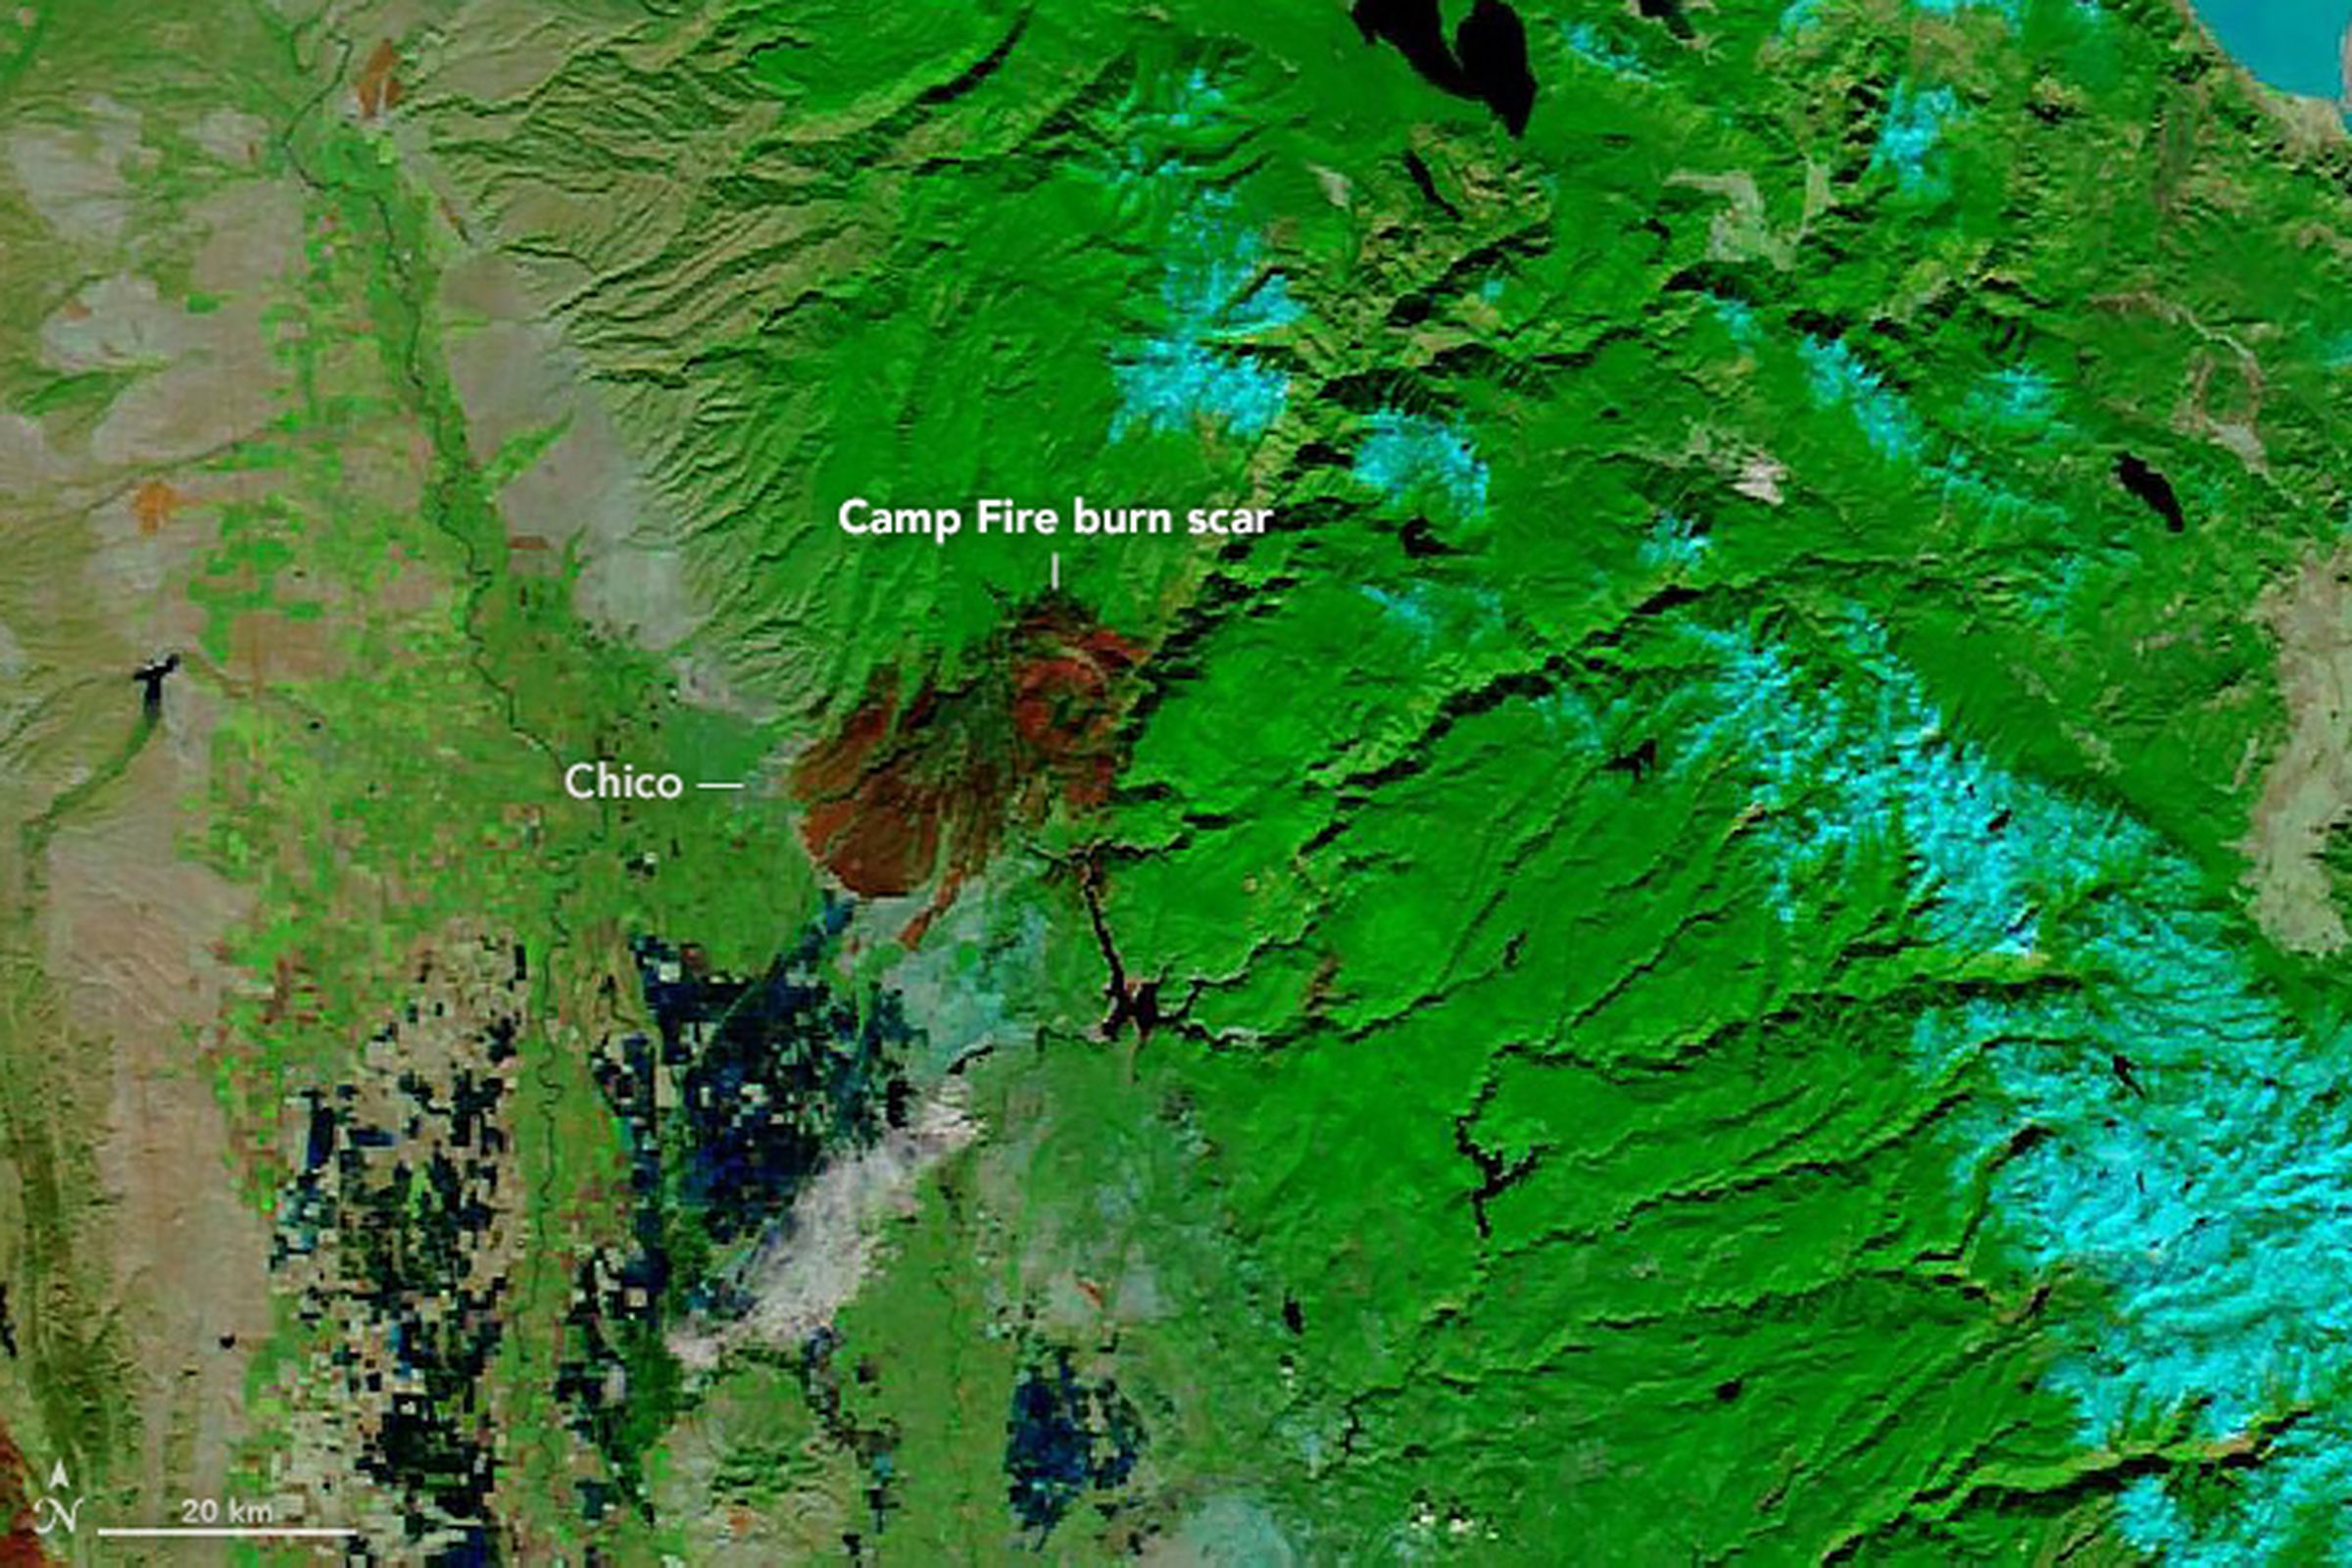 Rains bring the risk of mudslides in the Camp Fire burn scar. 